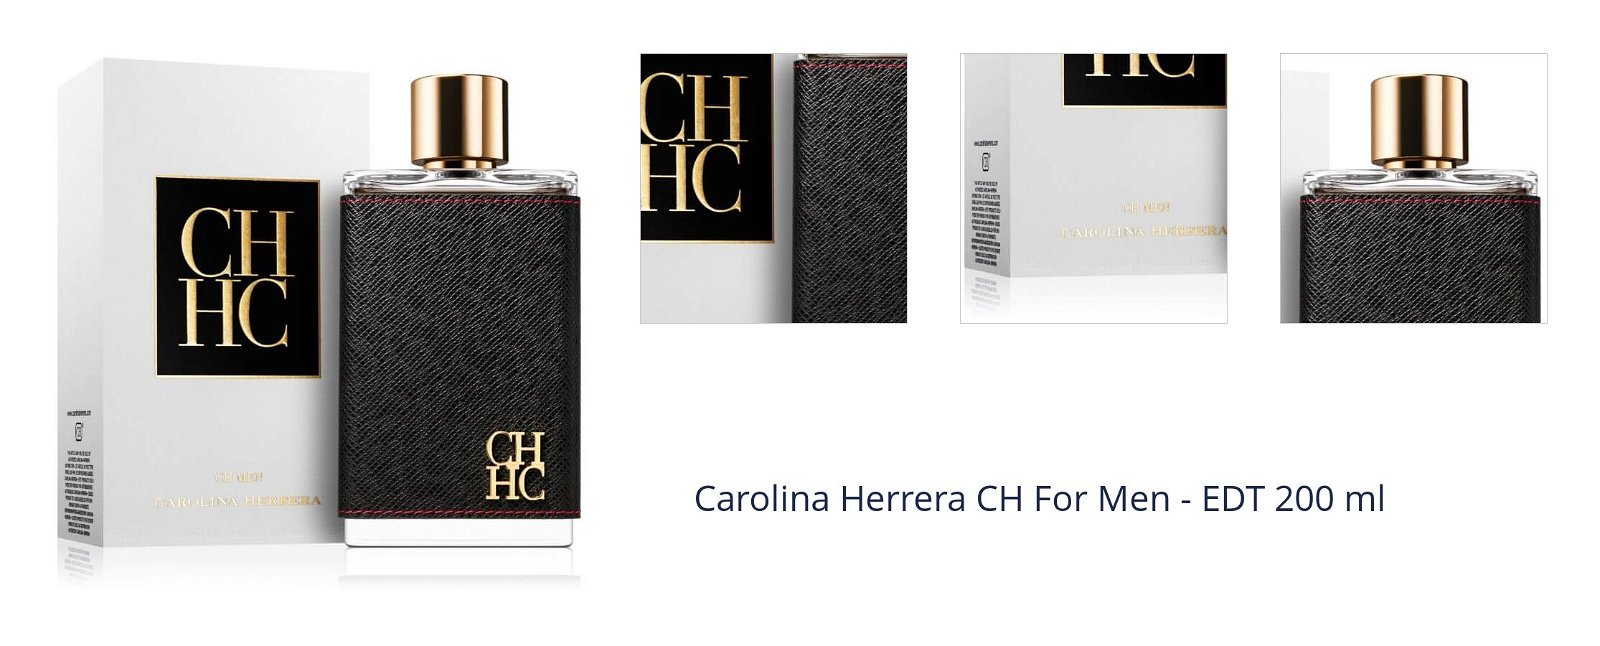 Carolina Herrera CH For Men - EDT 200 ml 1